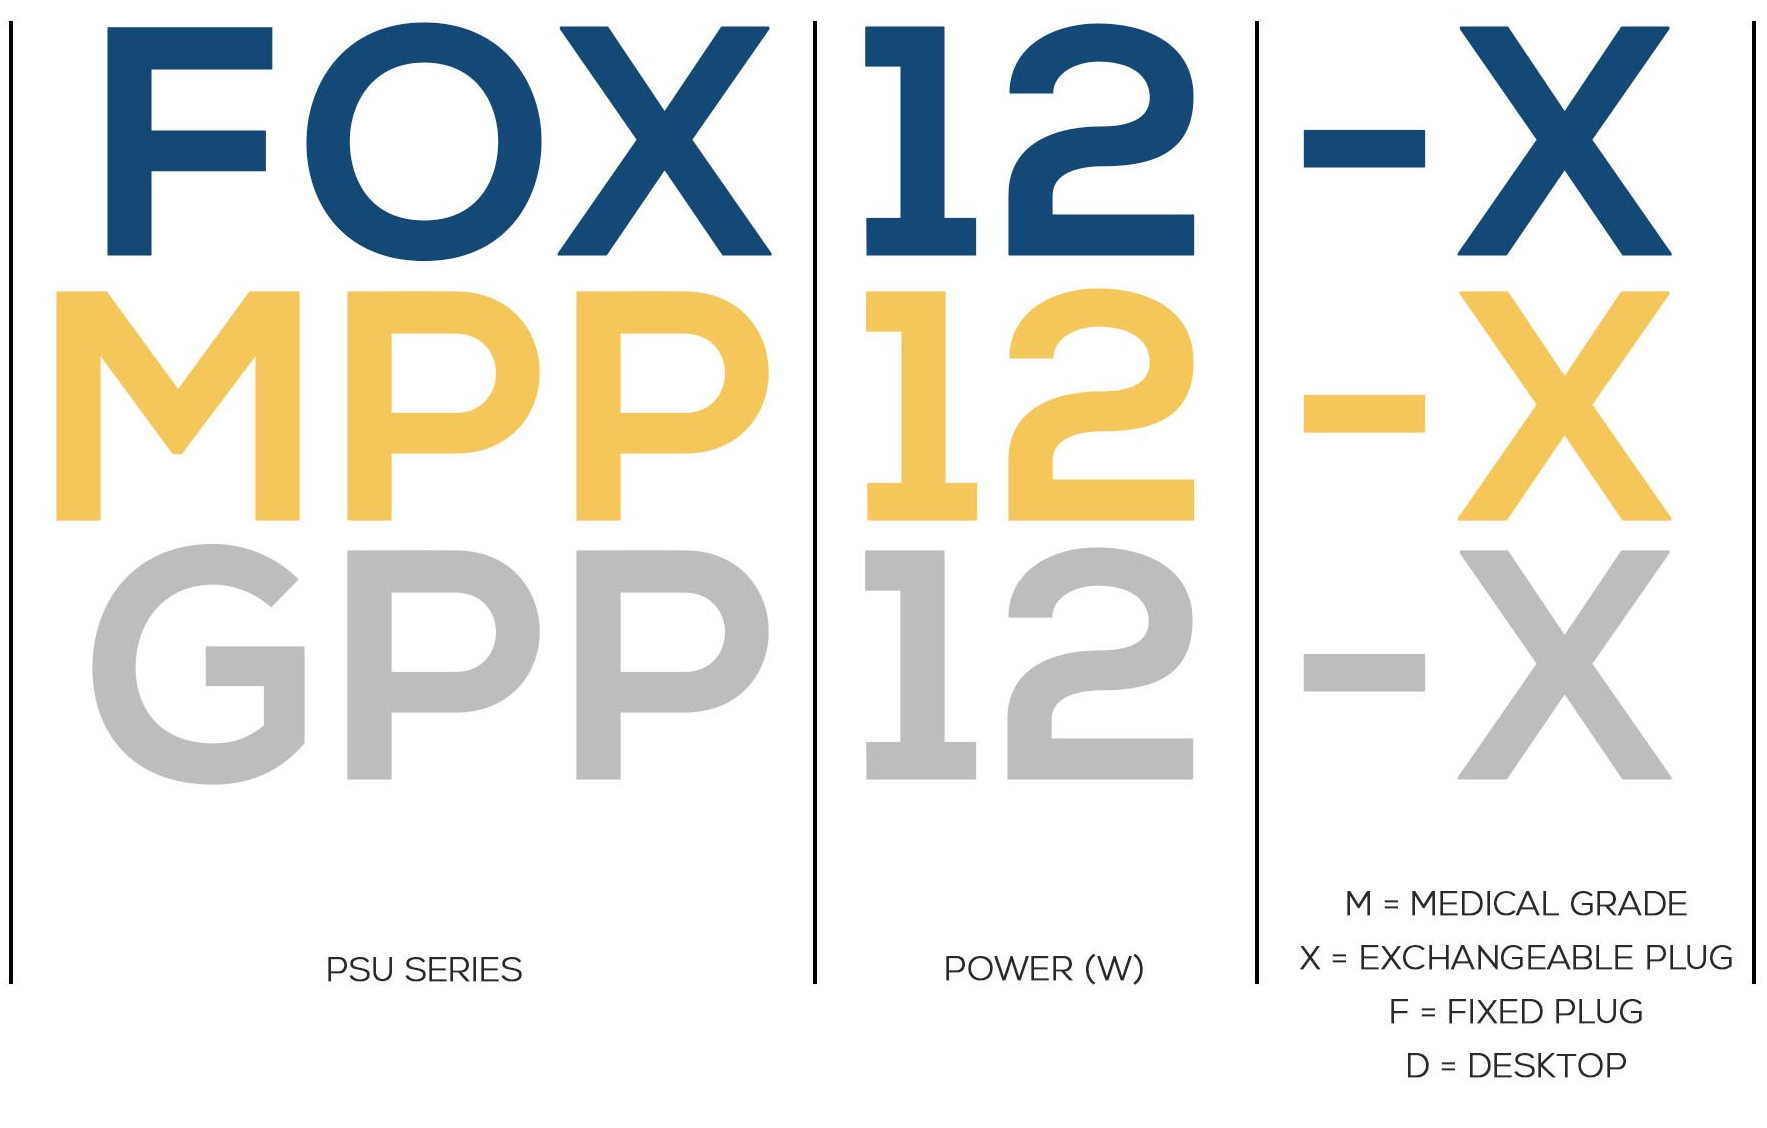 A logo for fox 12 - x mpp 12 - x gpp 12 - x